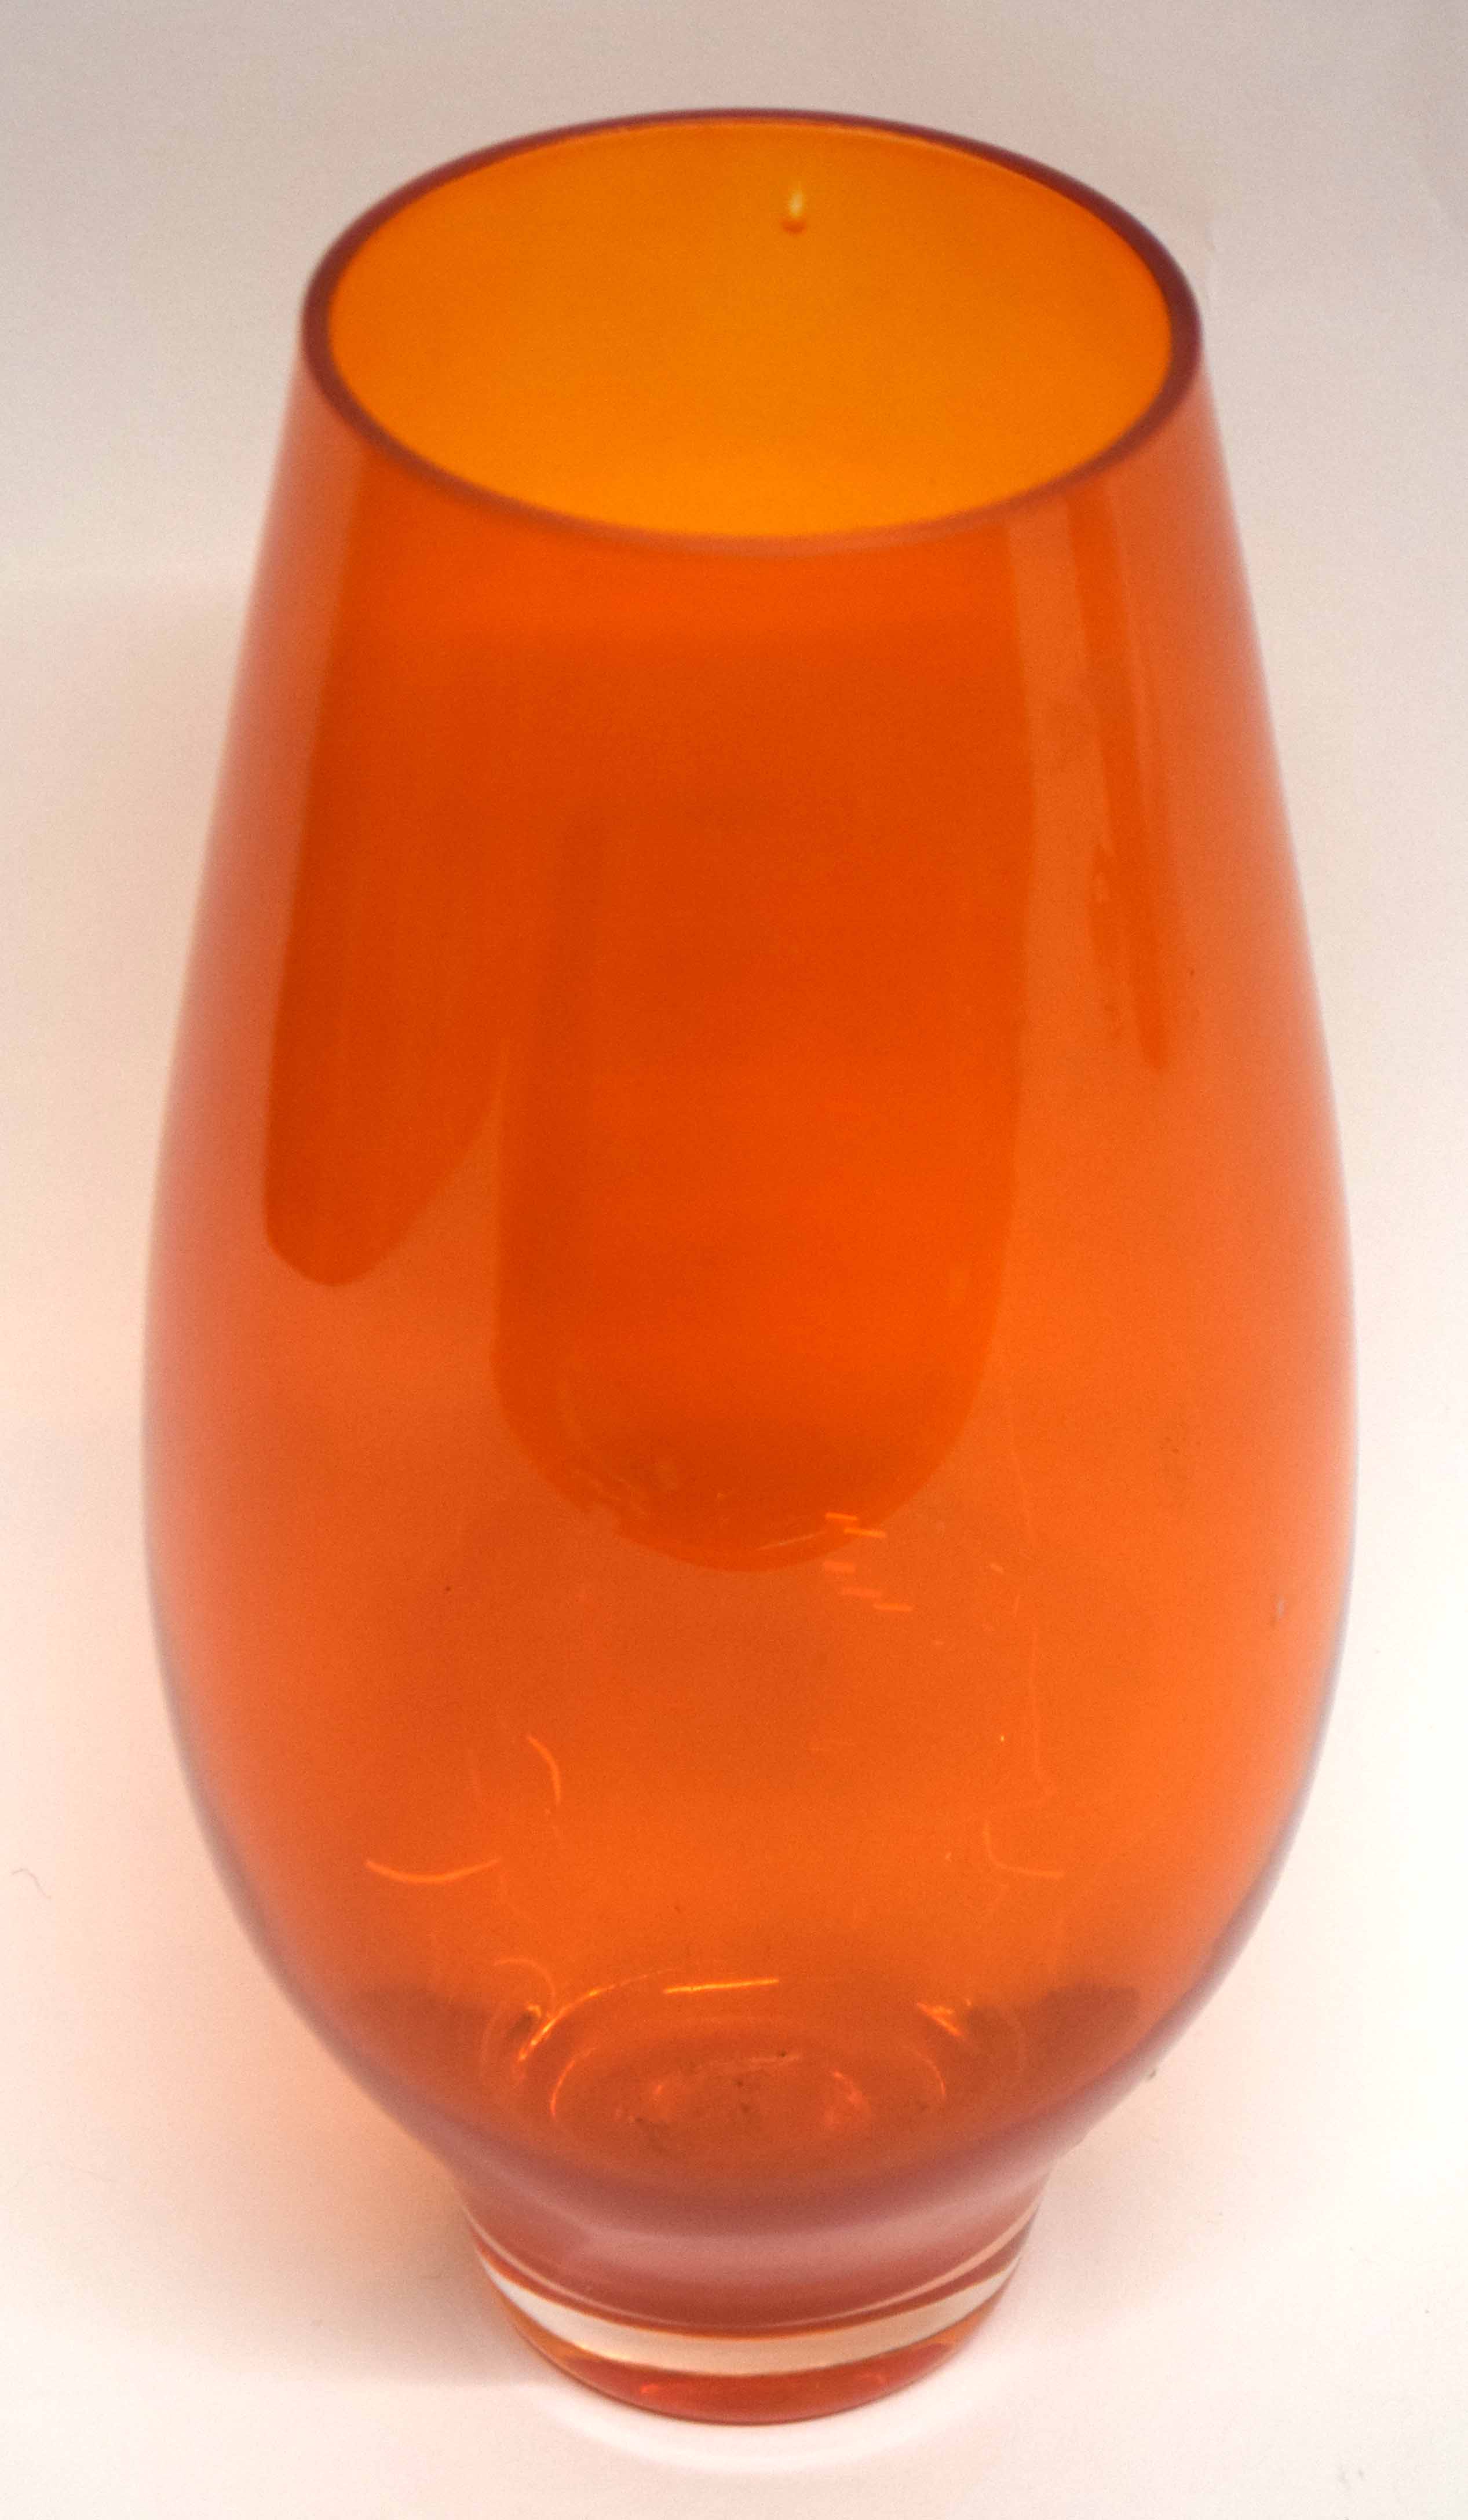 Orange Murano glass vase with Murano label to side, 25cm high